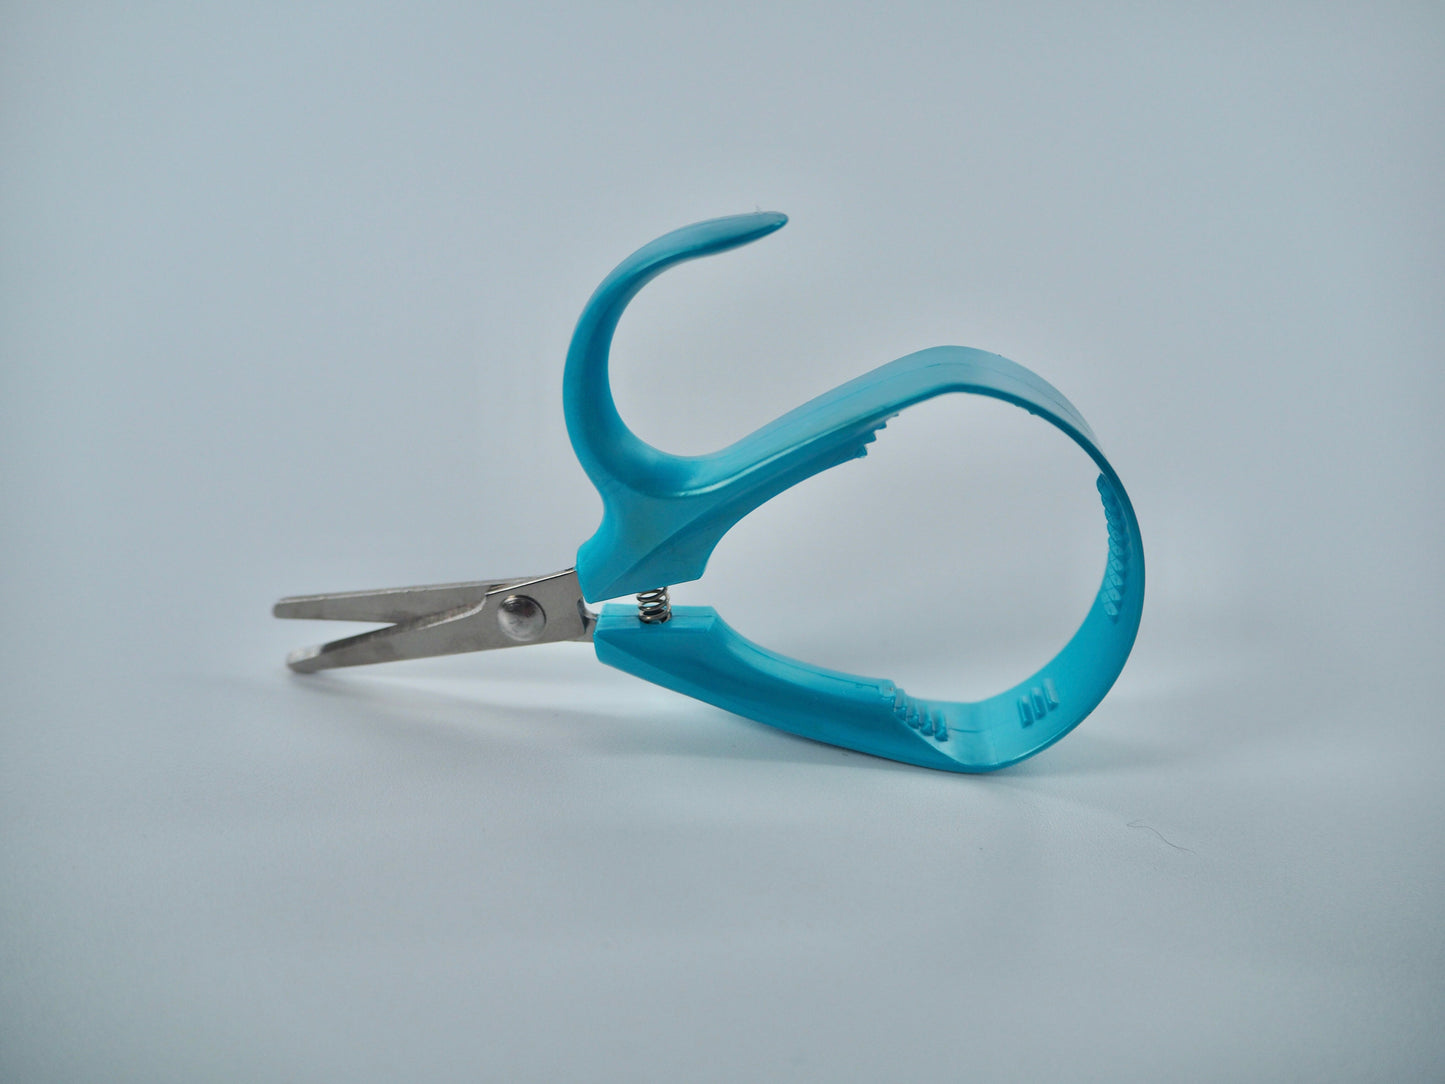 Universal design scissors "mimi" mini